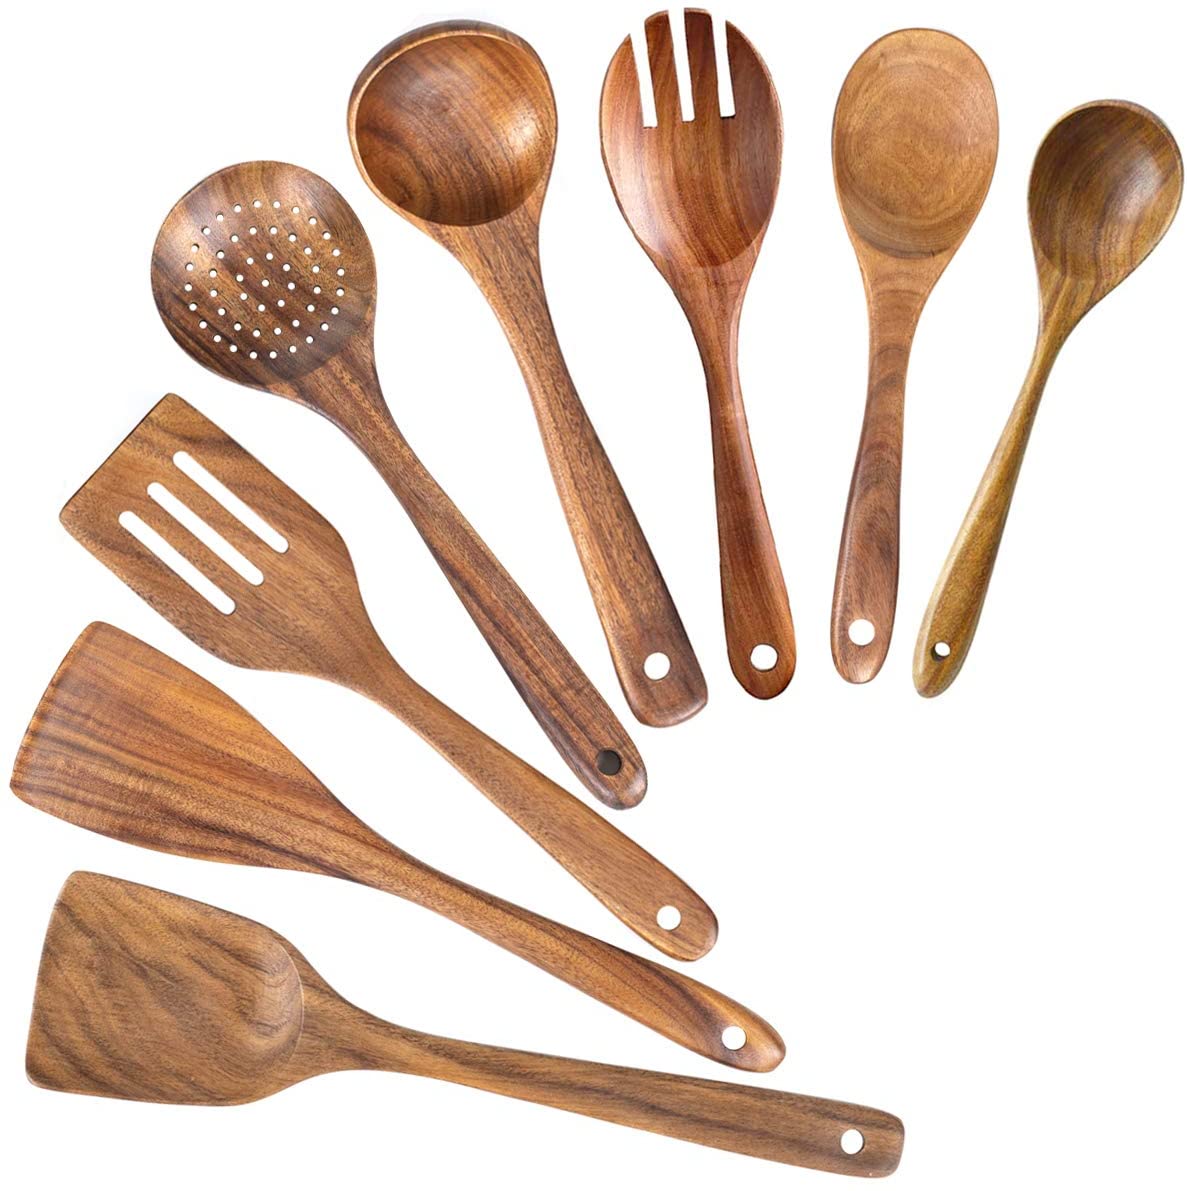 https://bigbigmart.com/wp-content/uploads/2022/01/Wooden-Spoons-for-Cooking-Nonstick-Kitchen-Utensil-Set-Teak-8-Pack-1.jpg